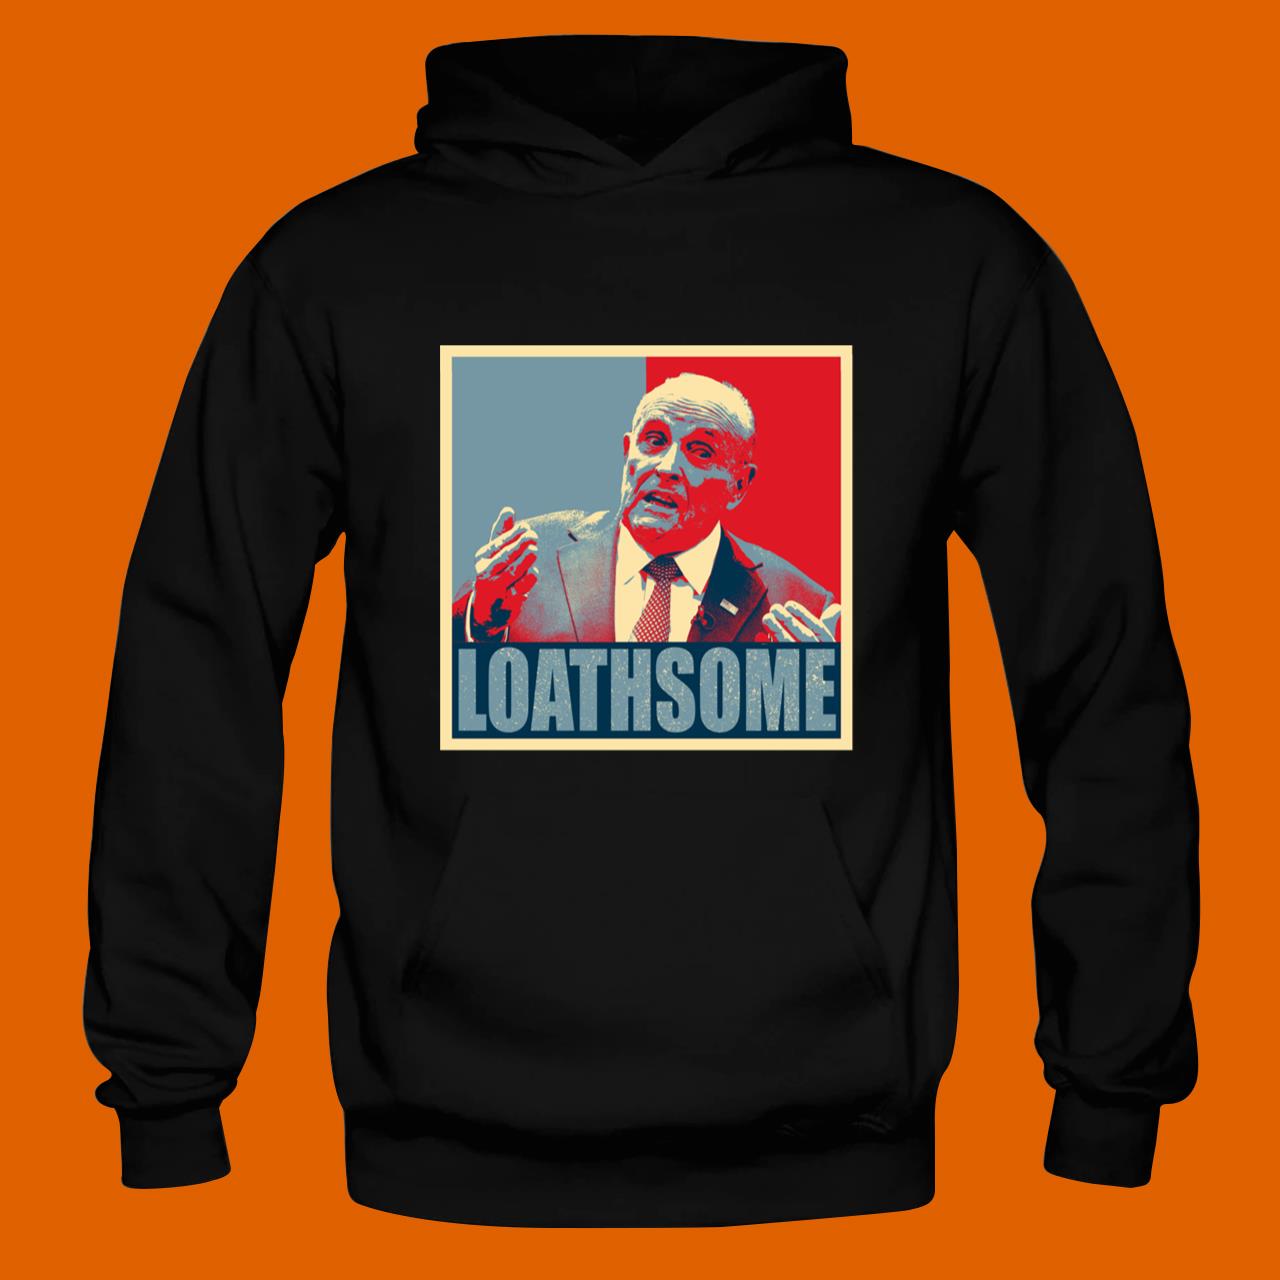 Loathsome – Rudy Giuliani Classic T-Shirt